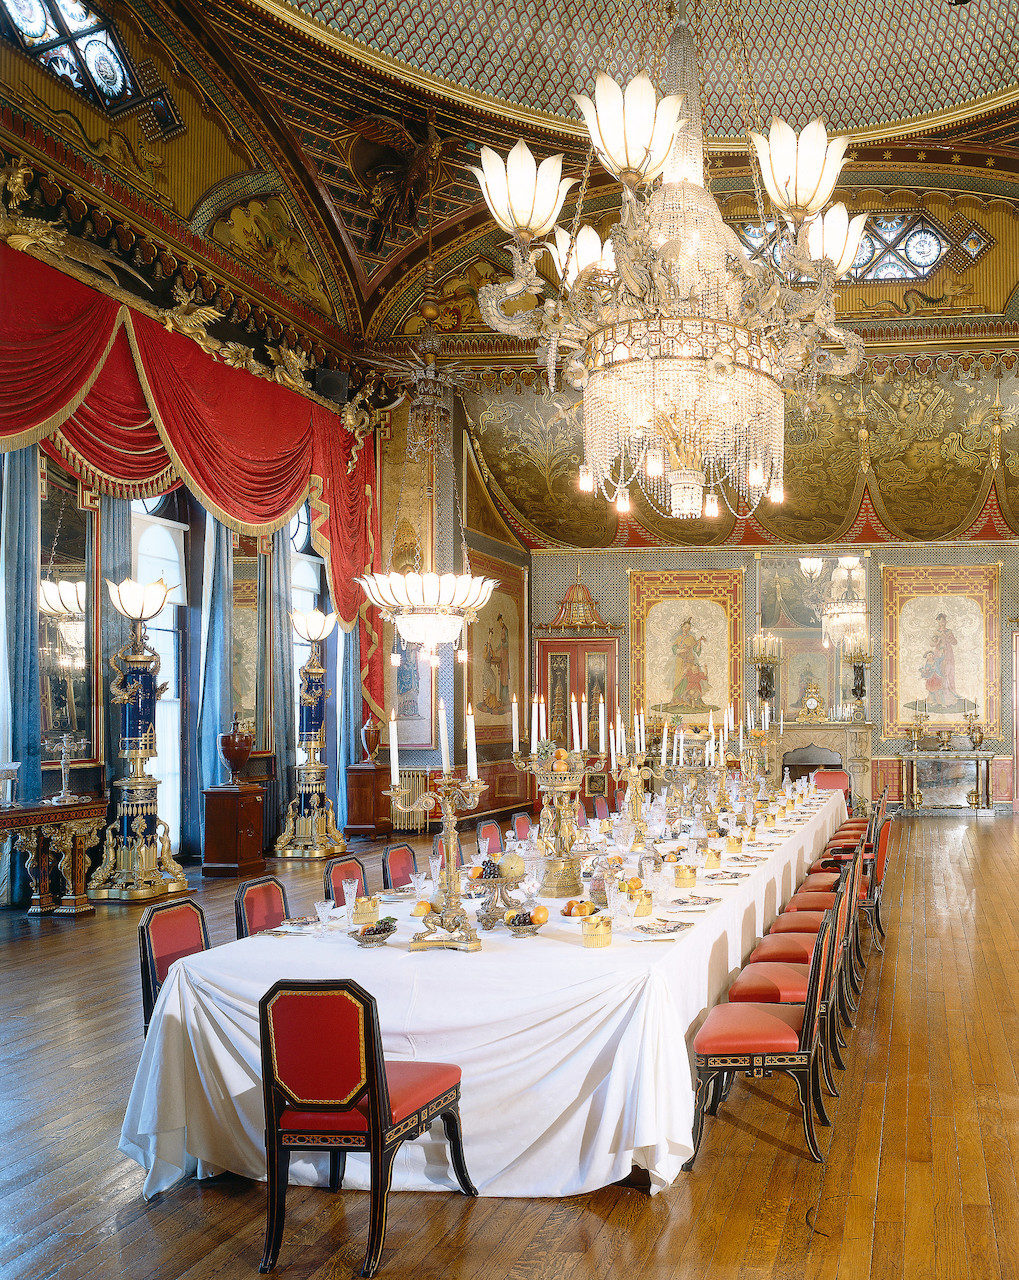 Royal Pavilion Banqueting Room Table.